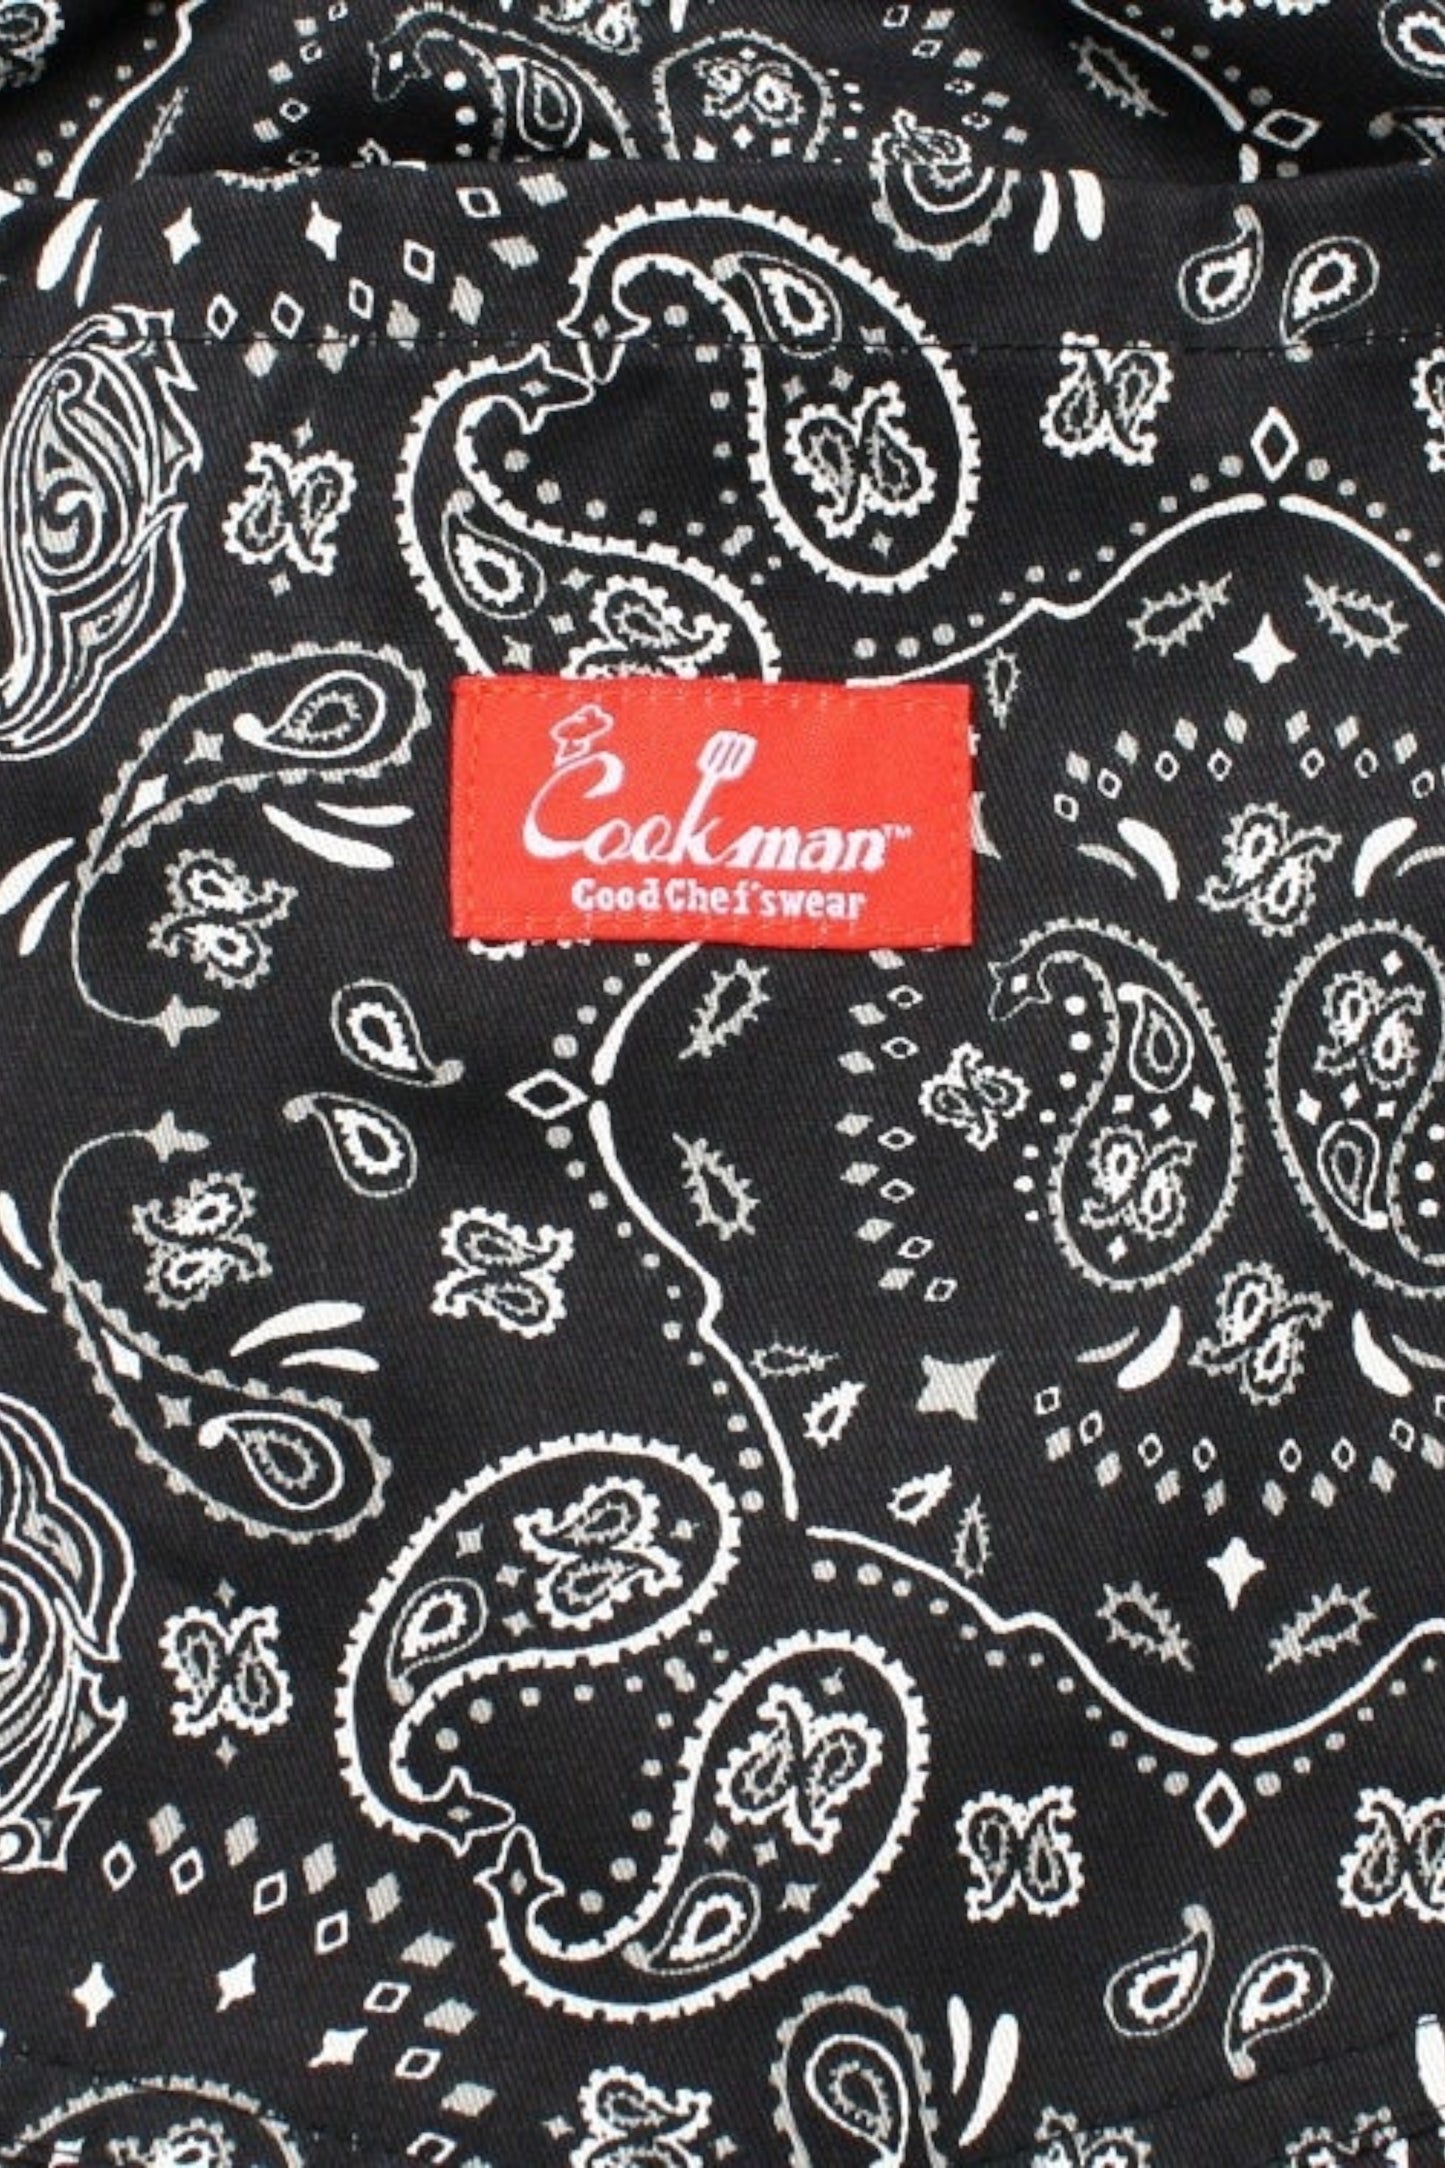 Cookman - Chef Pants Paisley (Black)